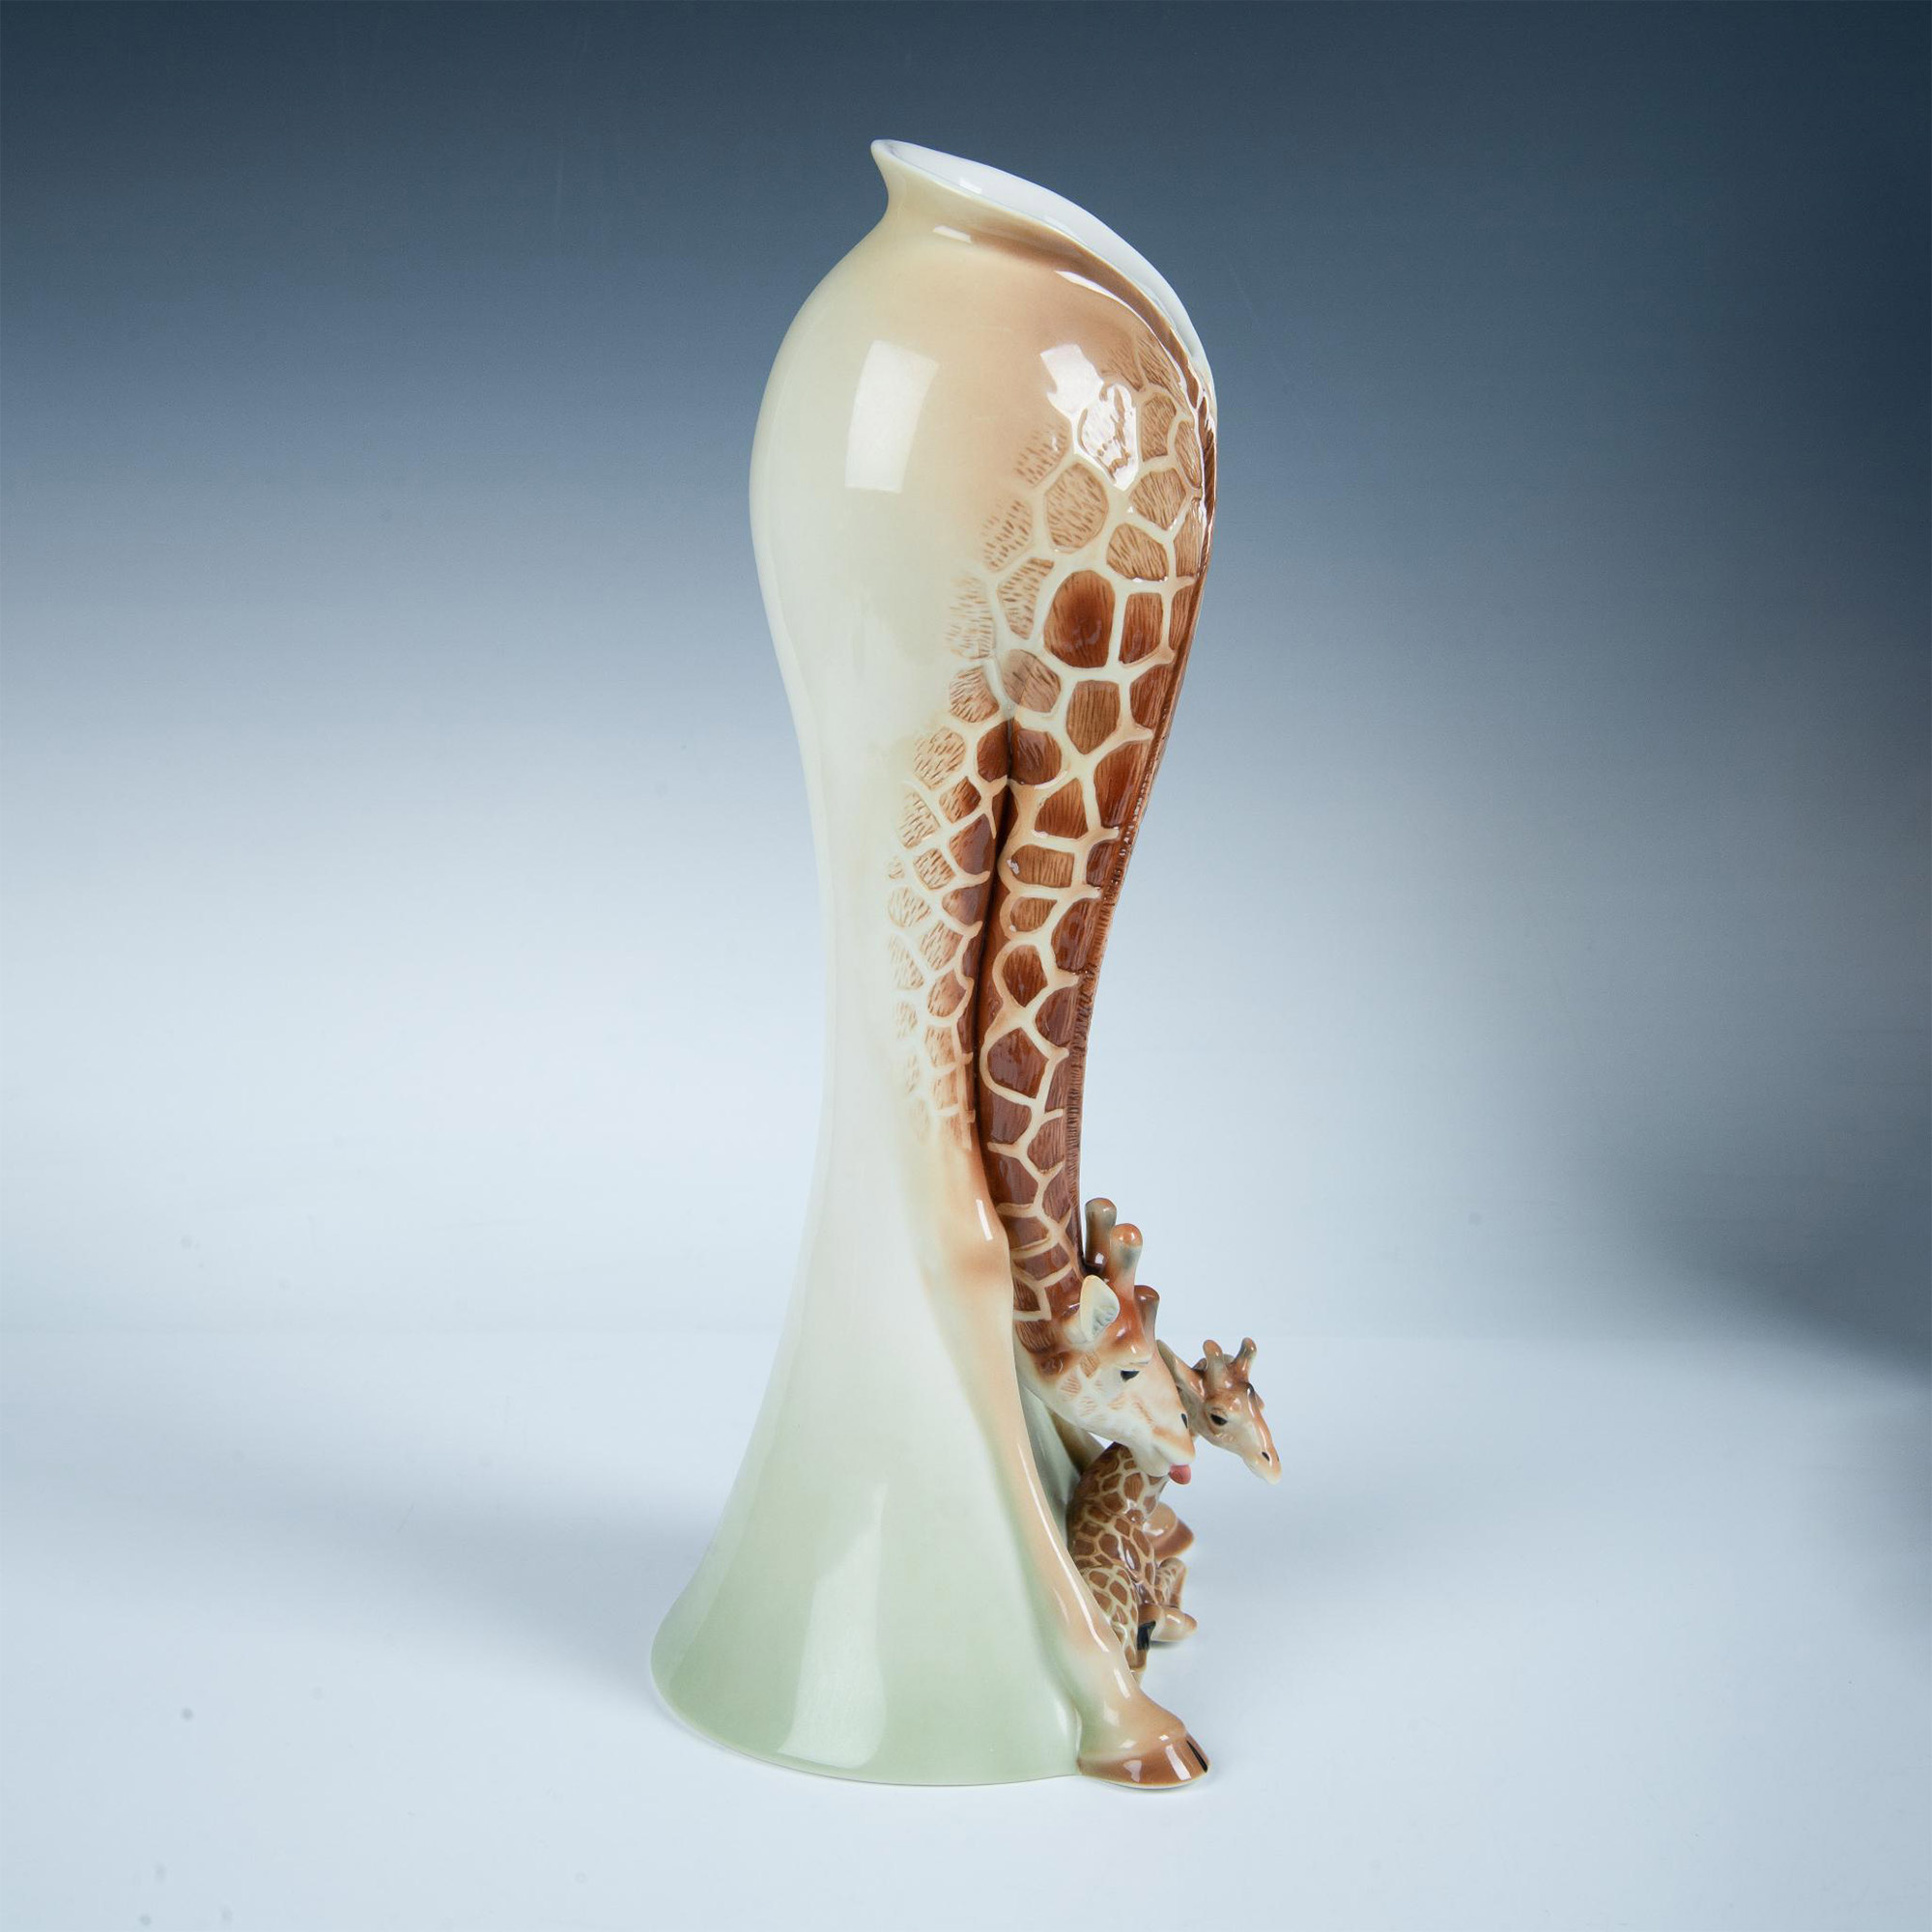 Franz Collection Porcelain Endless Beauty Vase, FZ00233 - Image 3 of 7